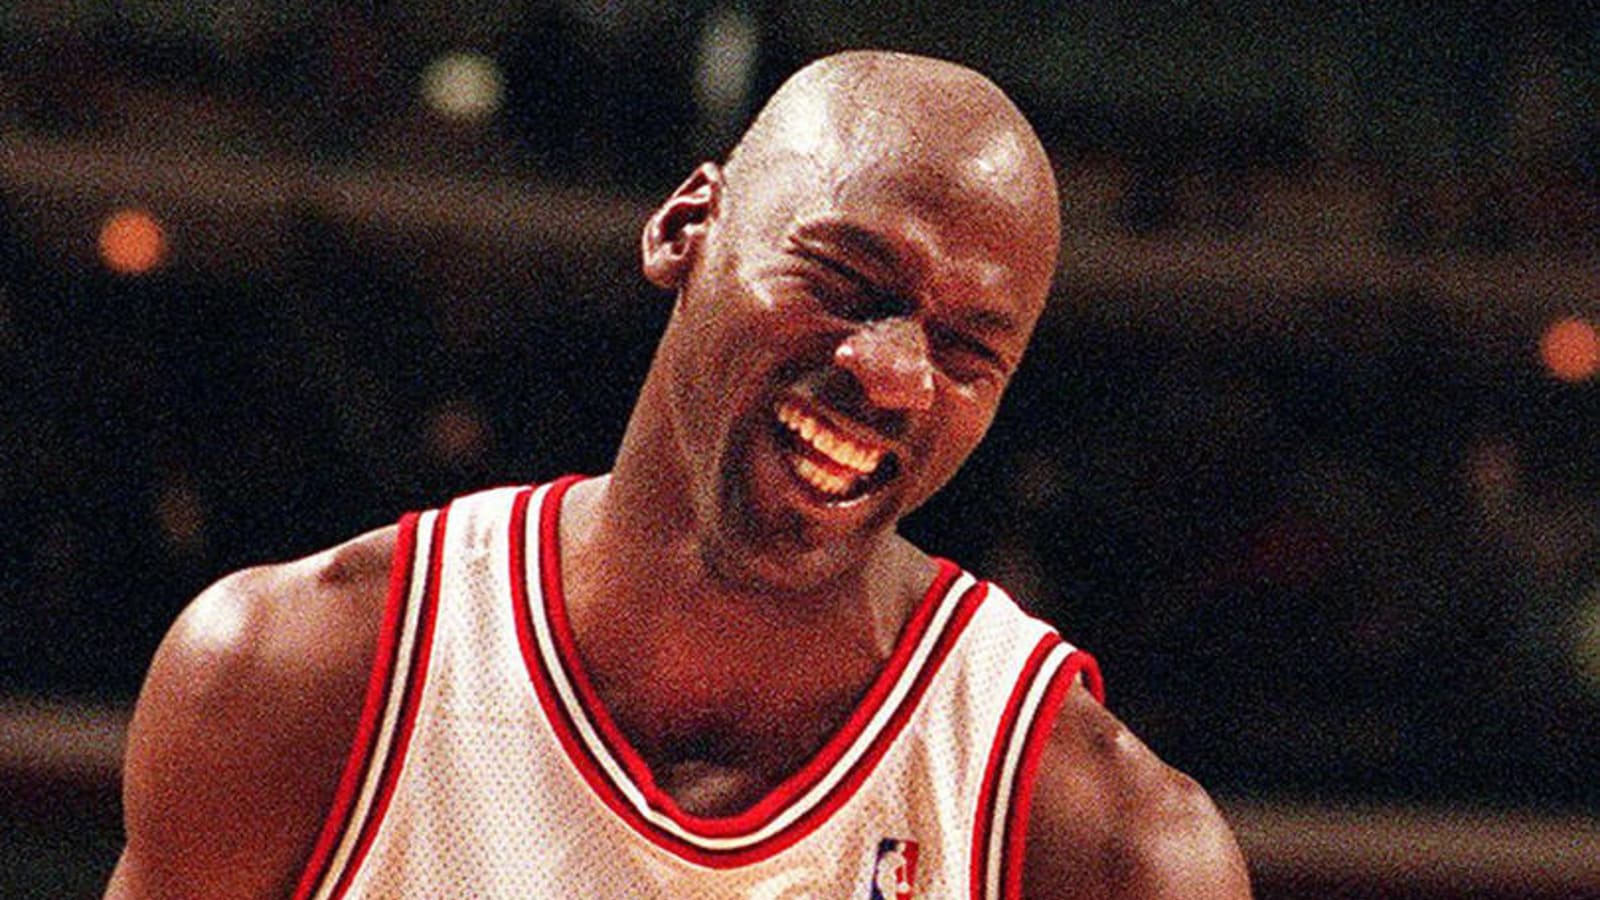 Michael Jordan basketball card sells for record $2.7 million